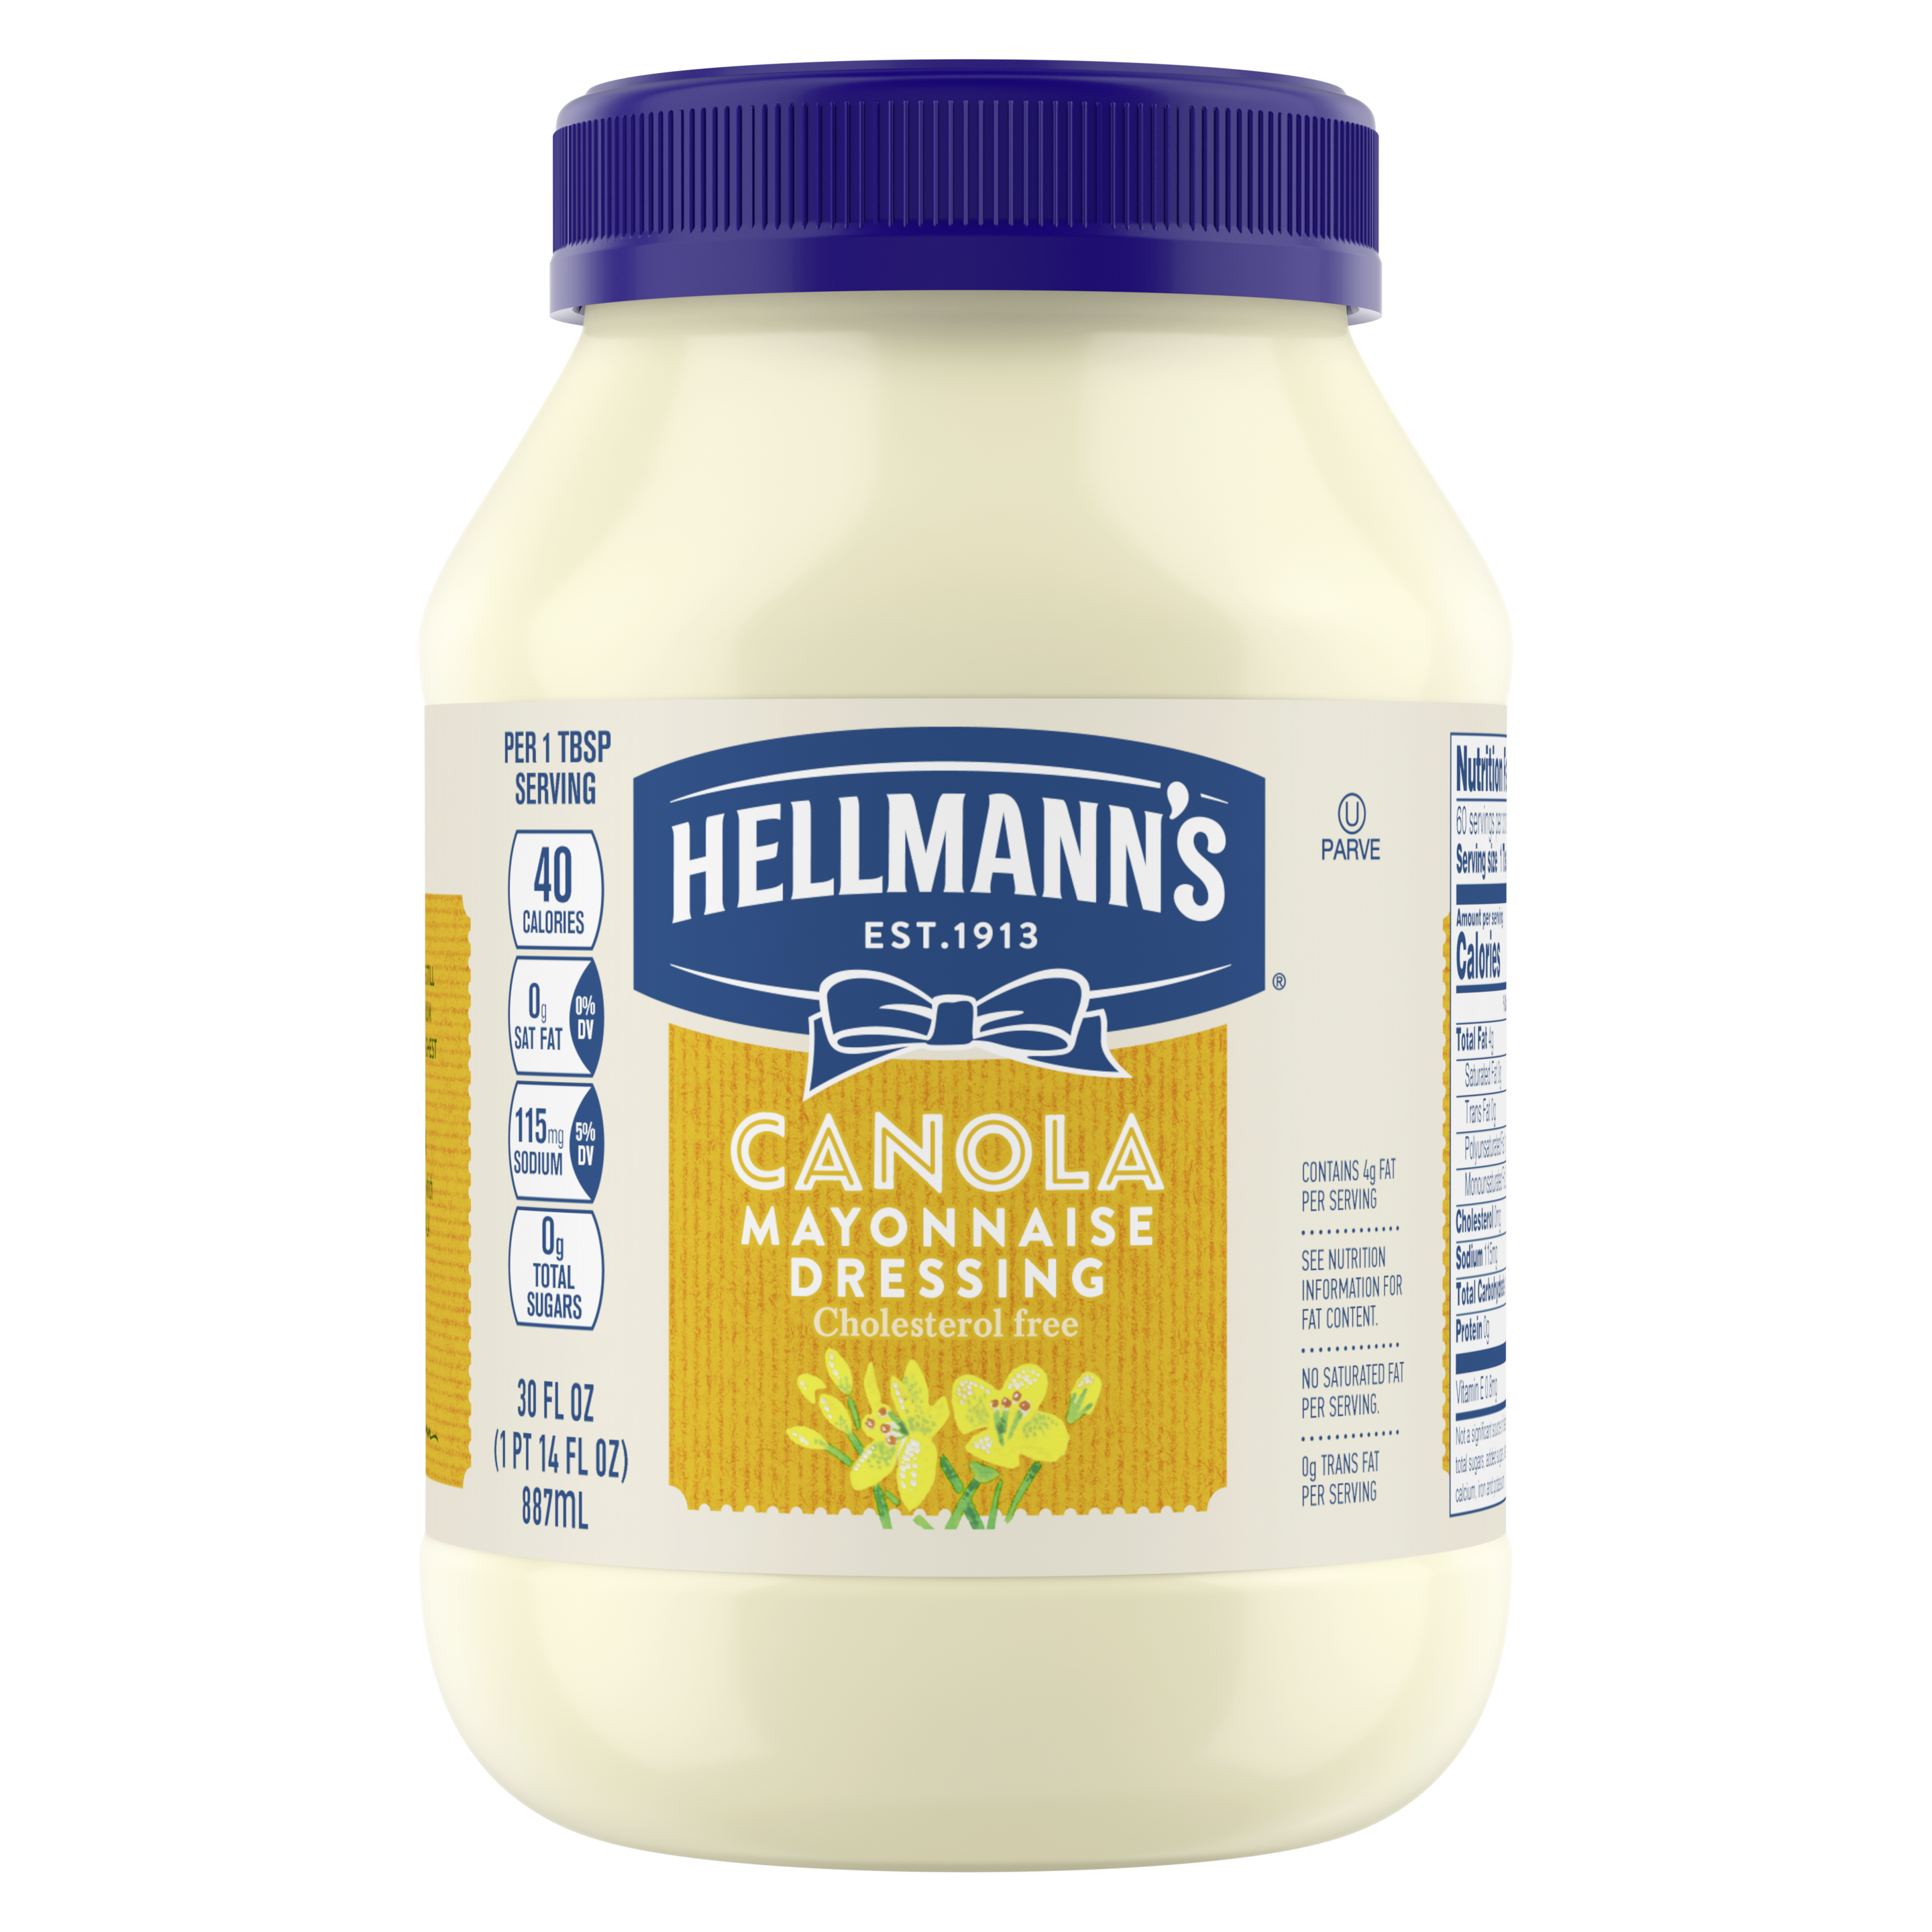 Hellmann's Canola Cholesterol Free Mayonnaise Dressing